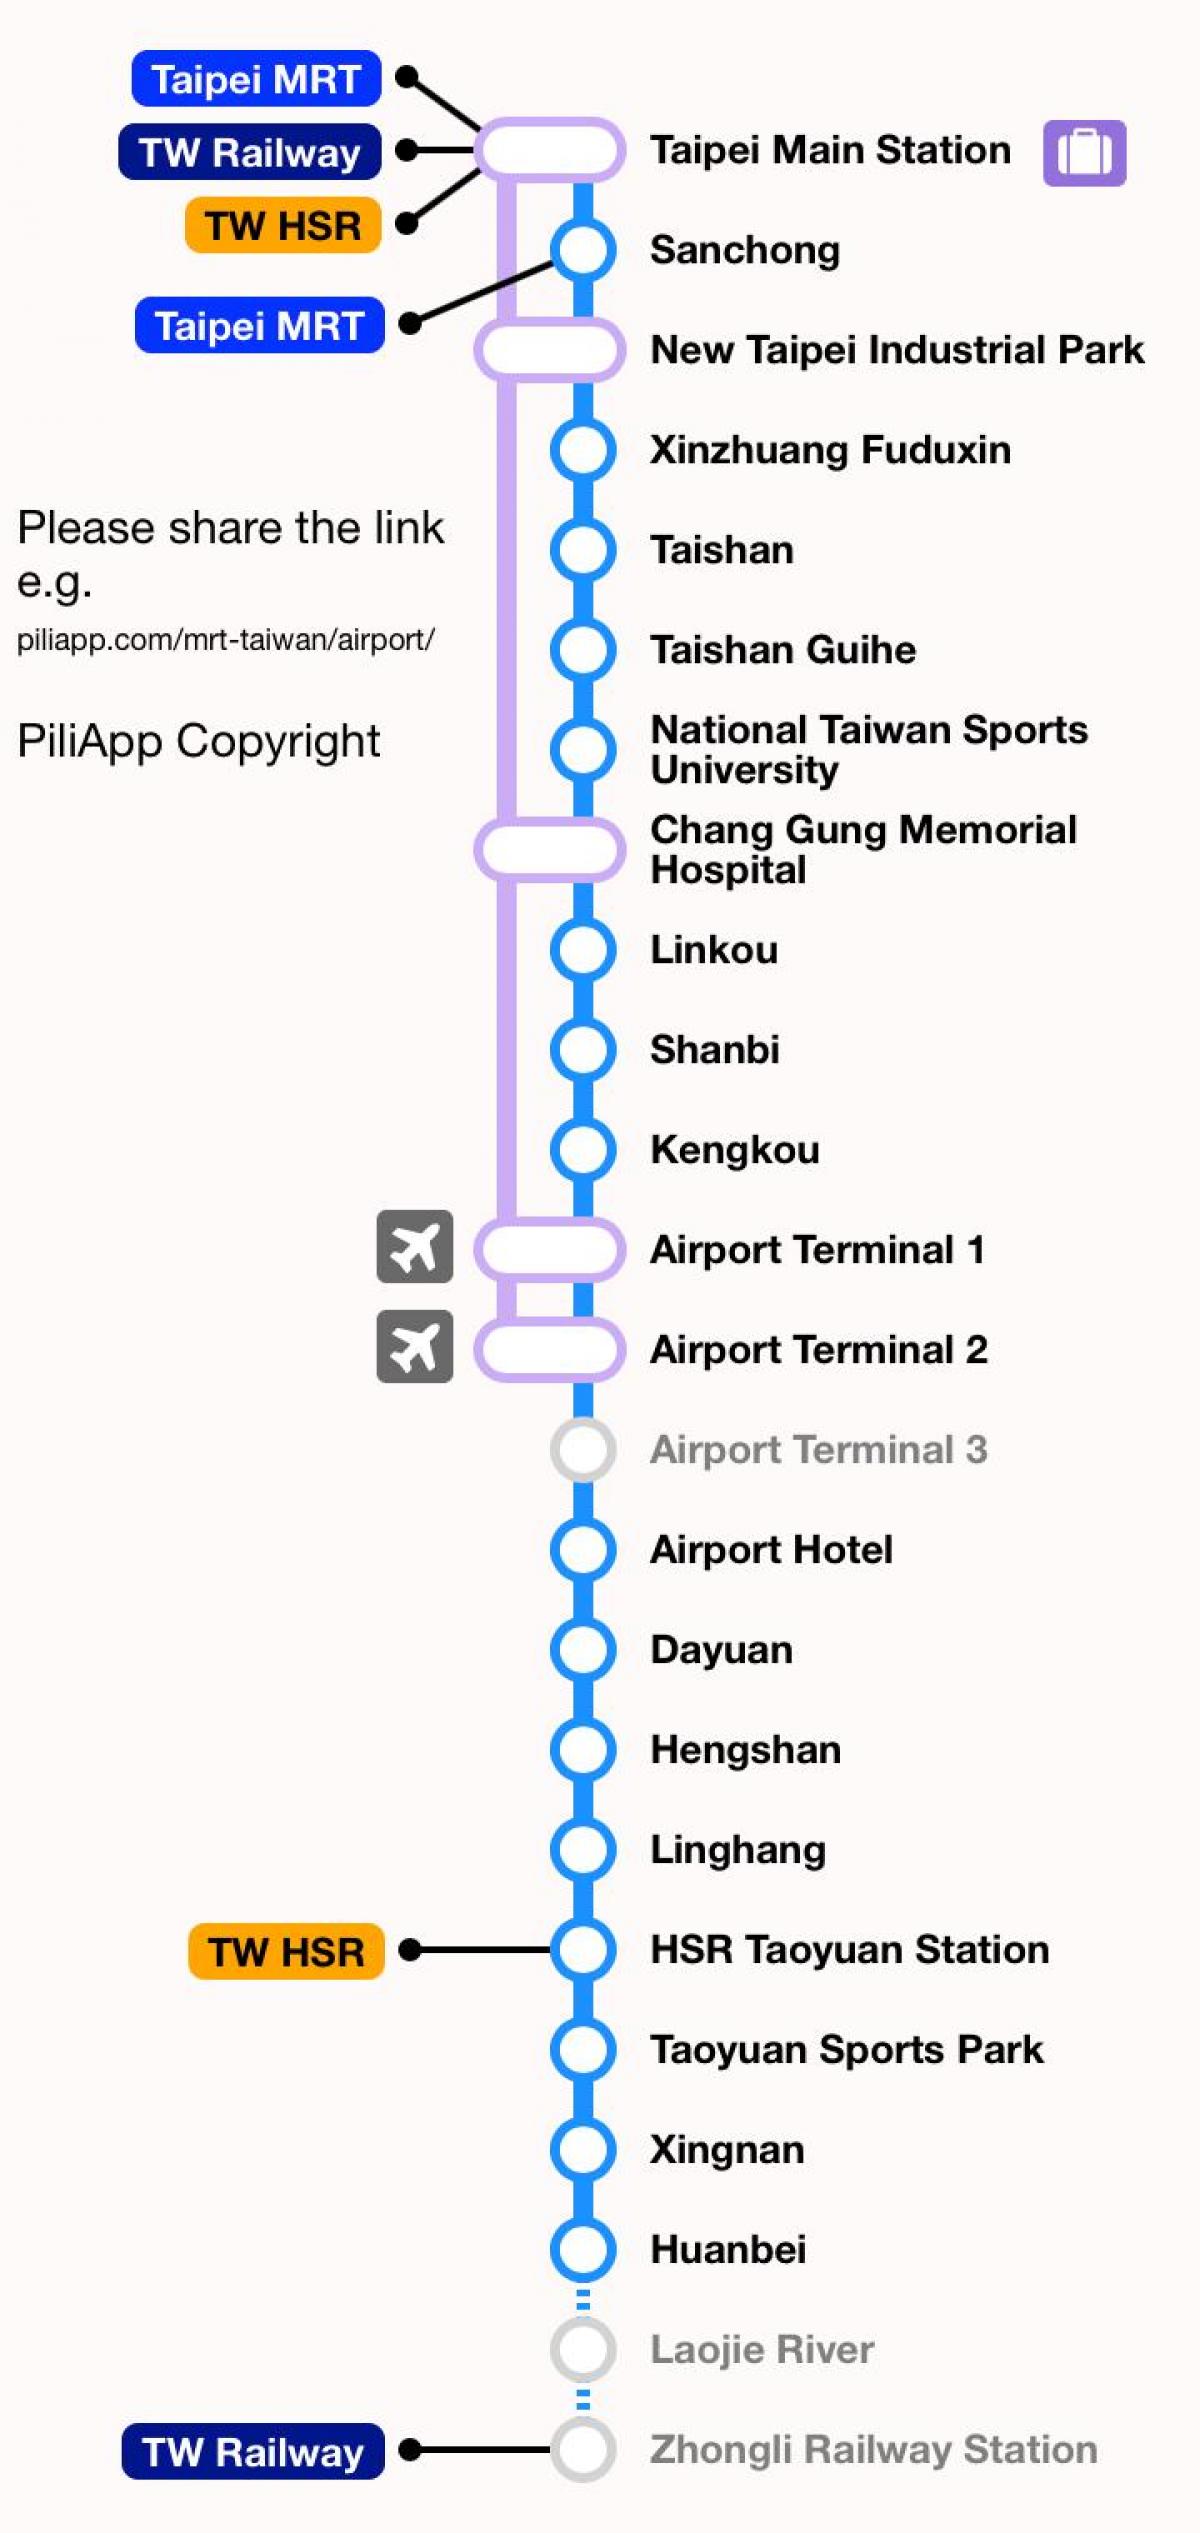 Taipei mrt რუკა taoyuan აეროპორტში